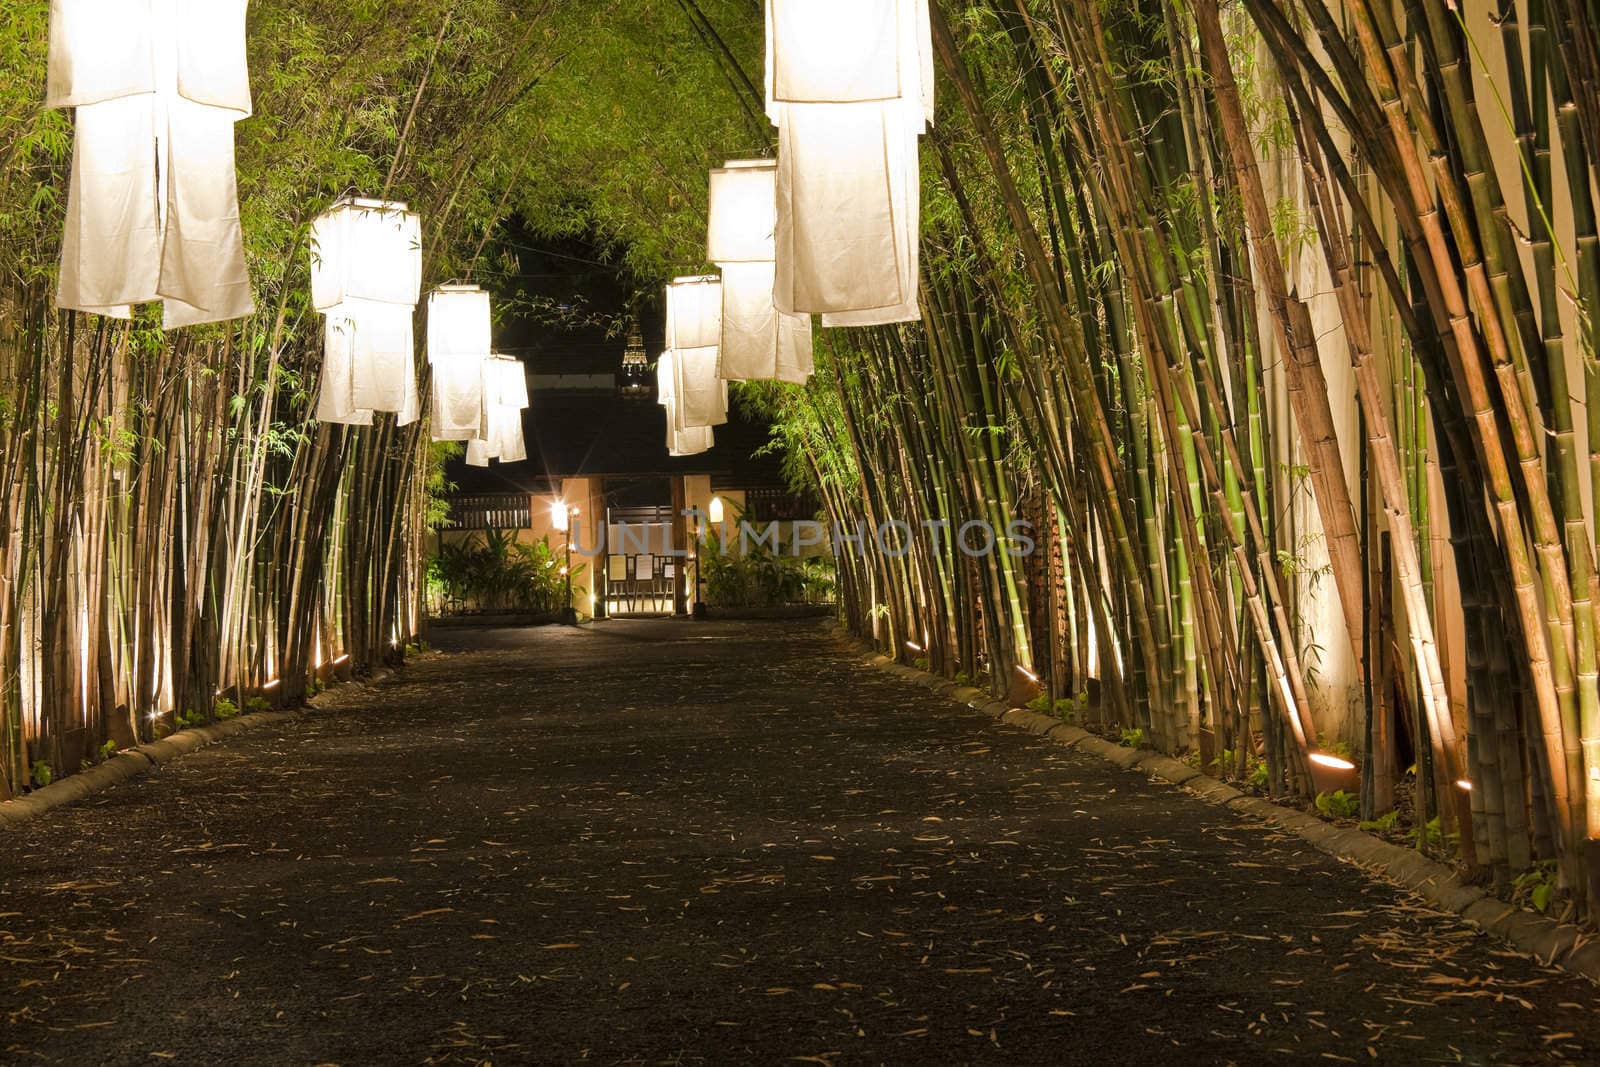 Asian lanterns in a bamboo alley. Night scene.